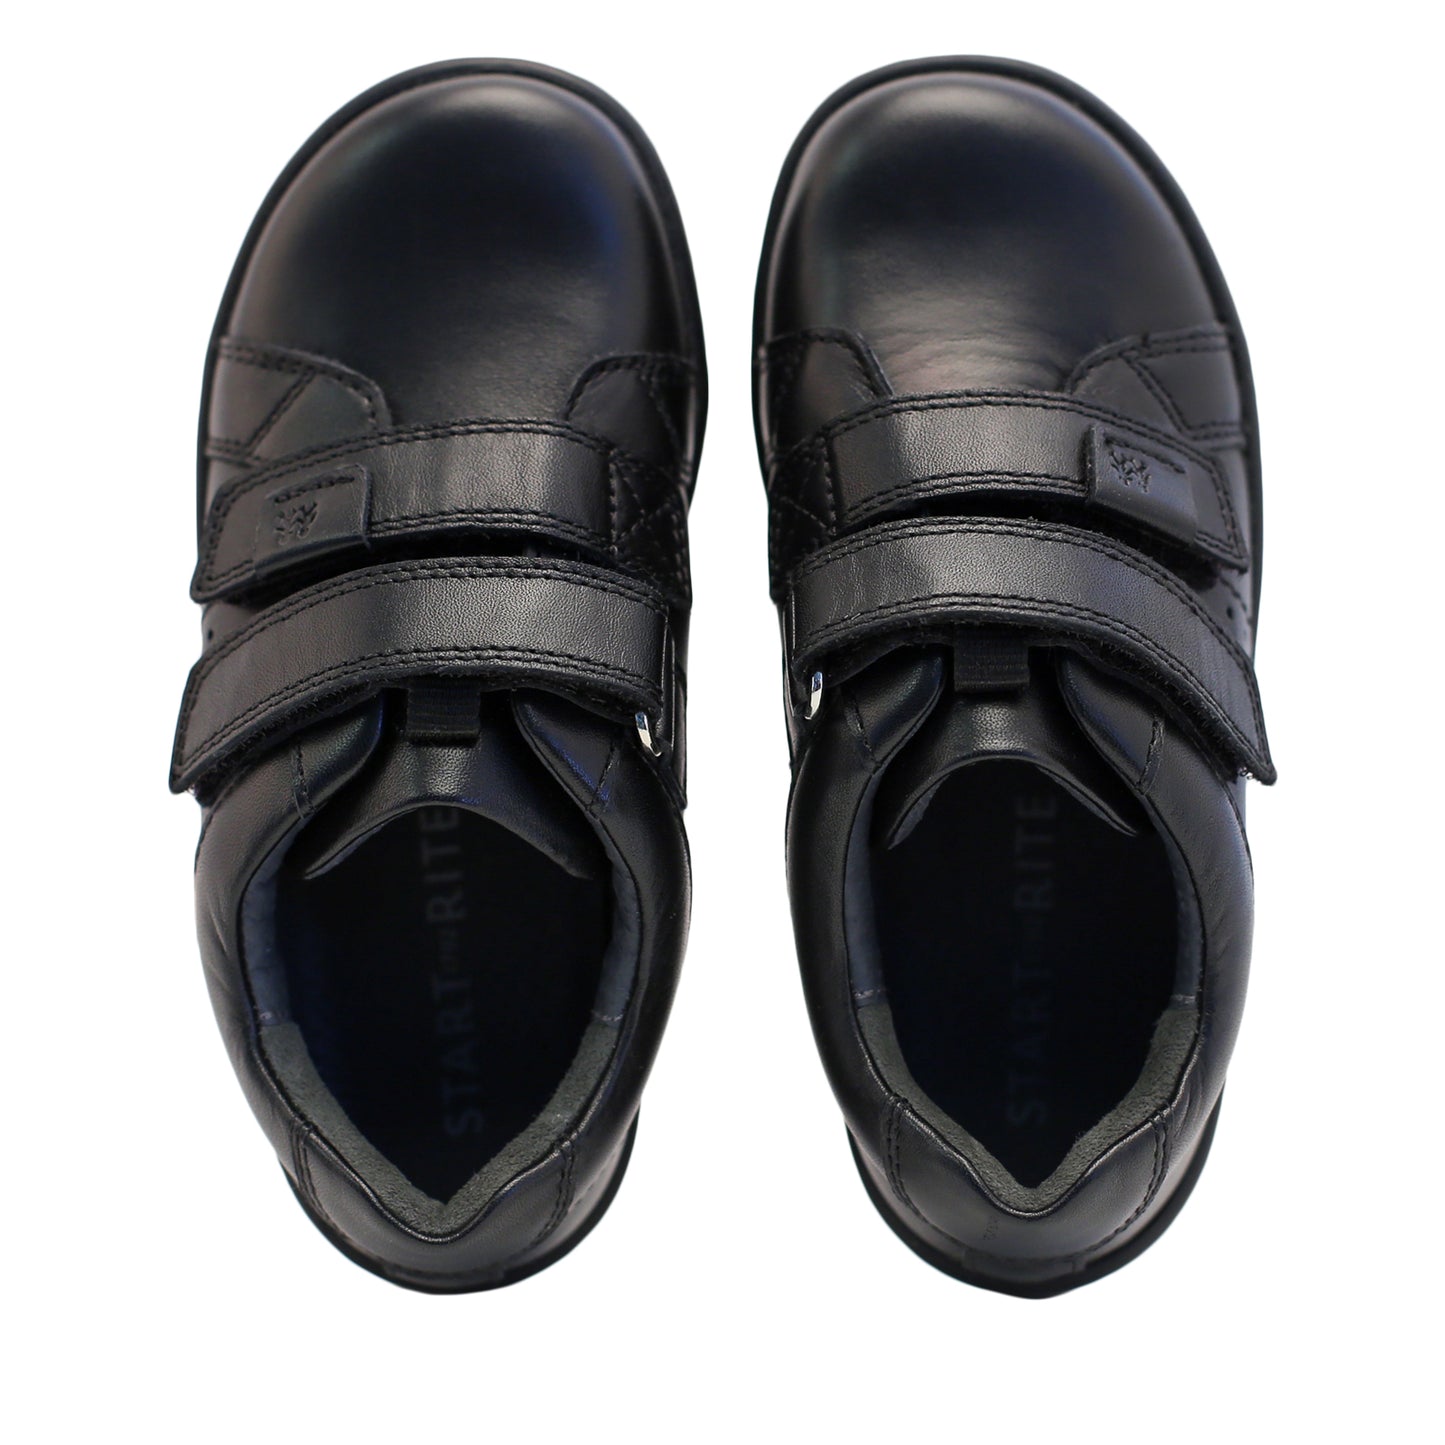 Explore Soft Black Leather Boy's Riptape First School Shoe